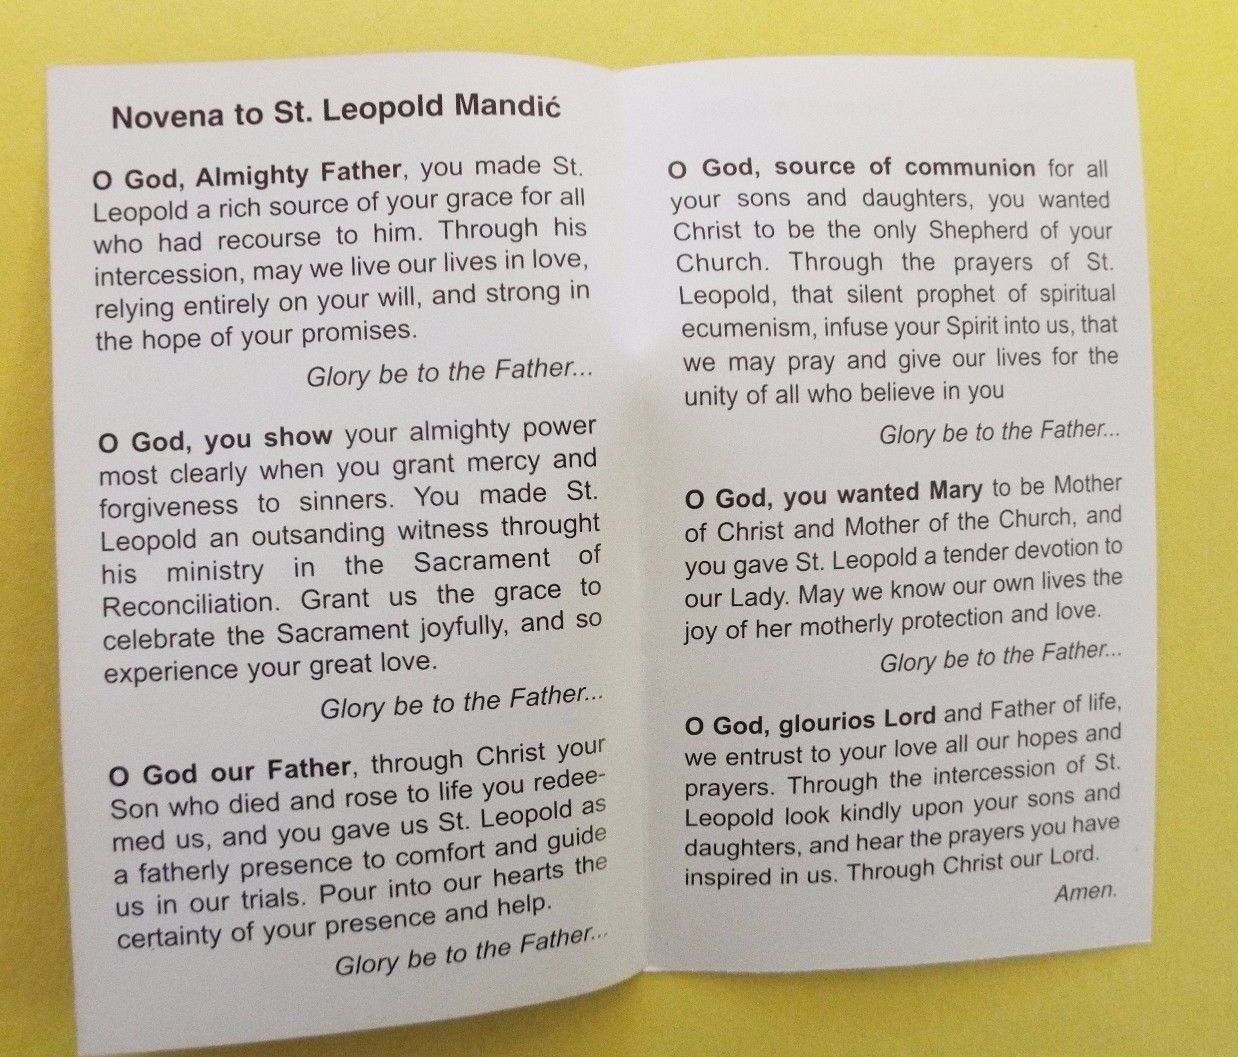 Saint Leopold Mandic Novena + Short Bio Folder, New Italy